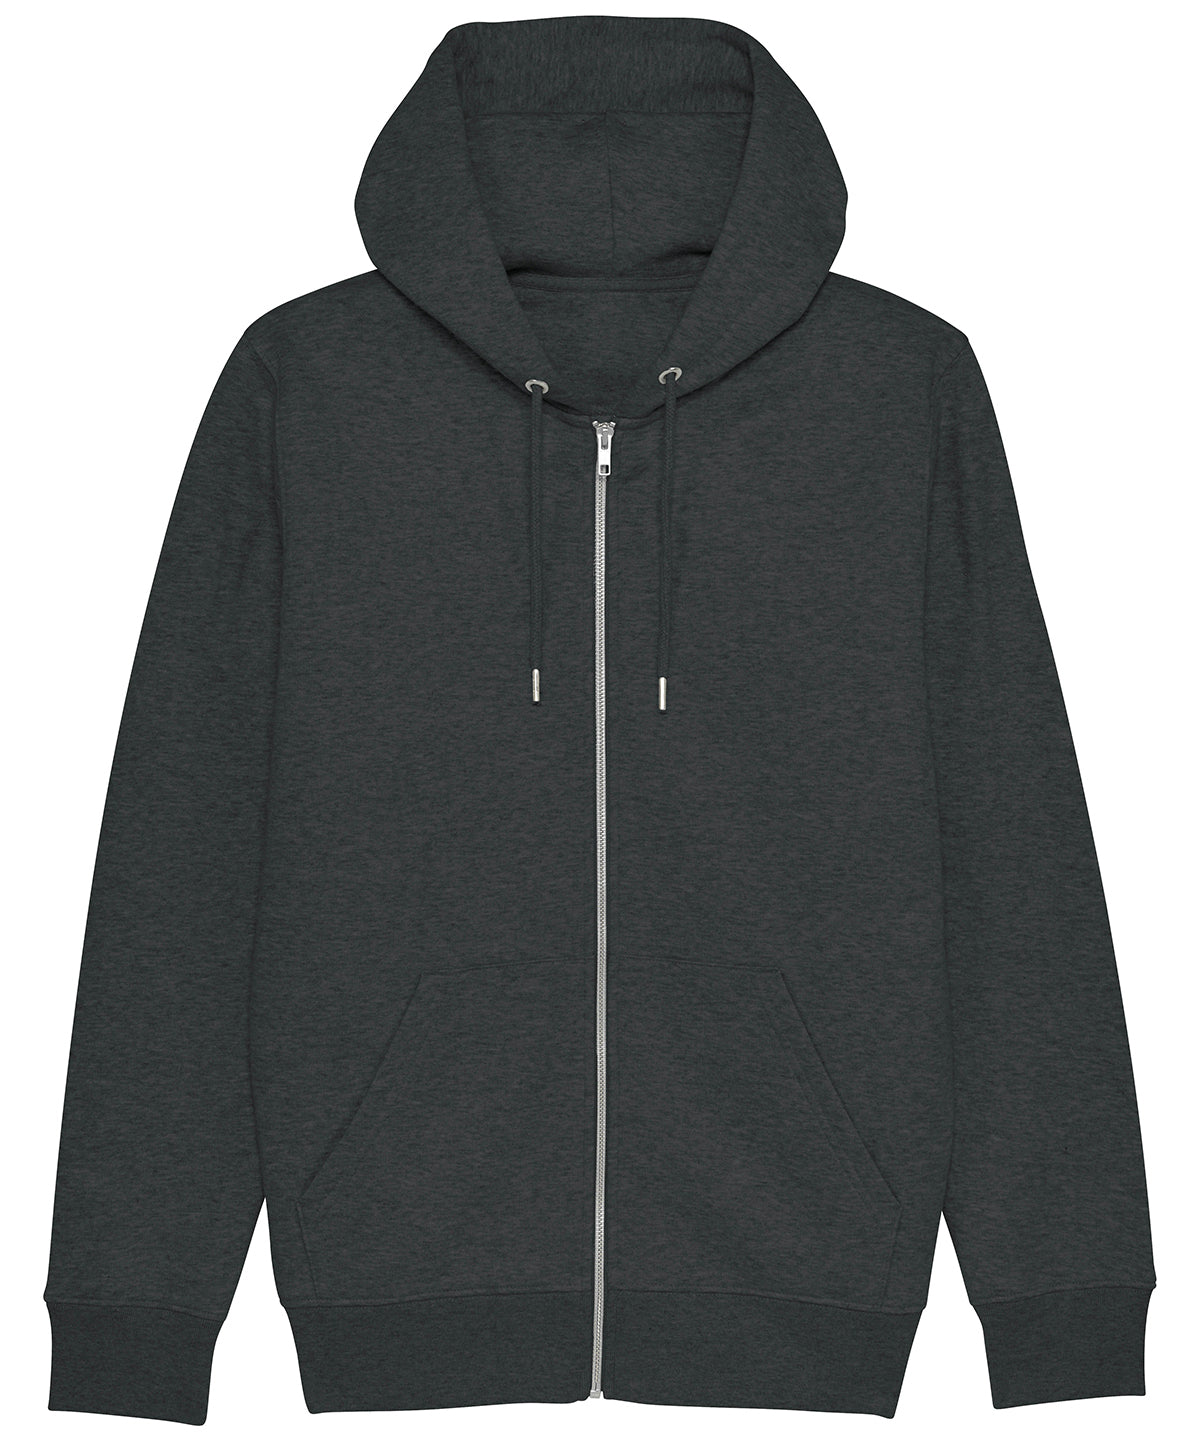 Cultivator, unisex iconic zip-thru hoodie sweatshirt